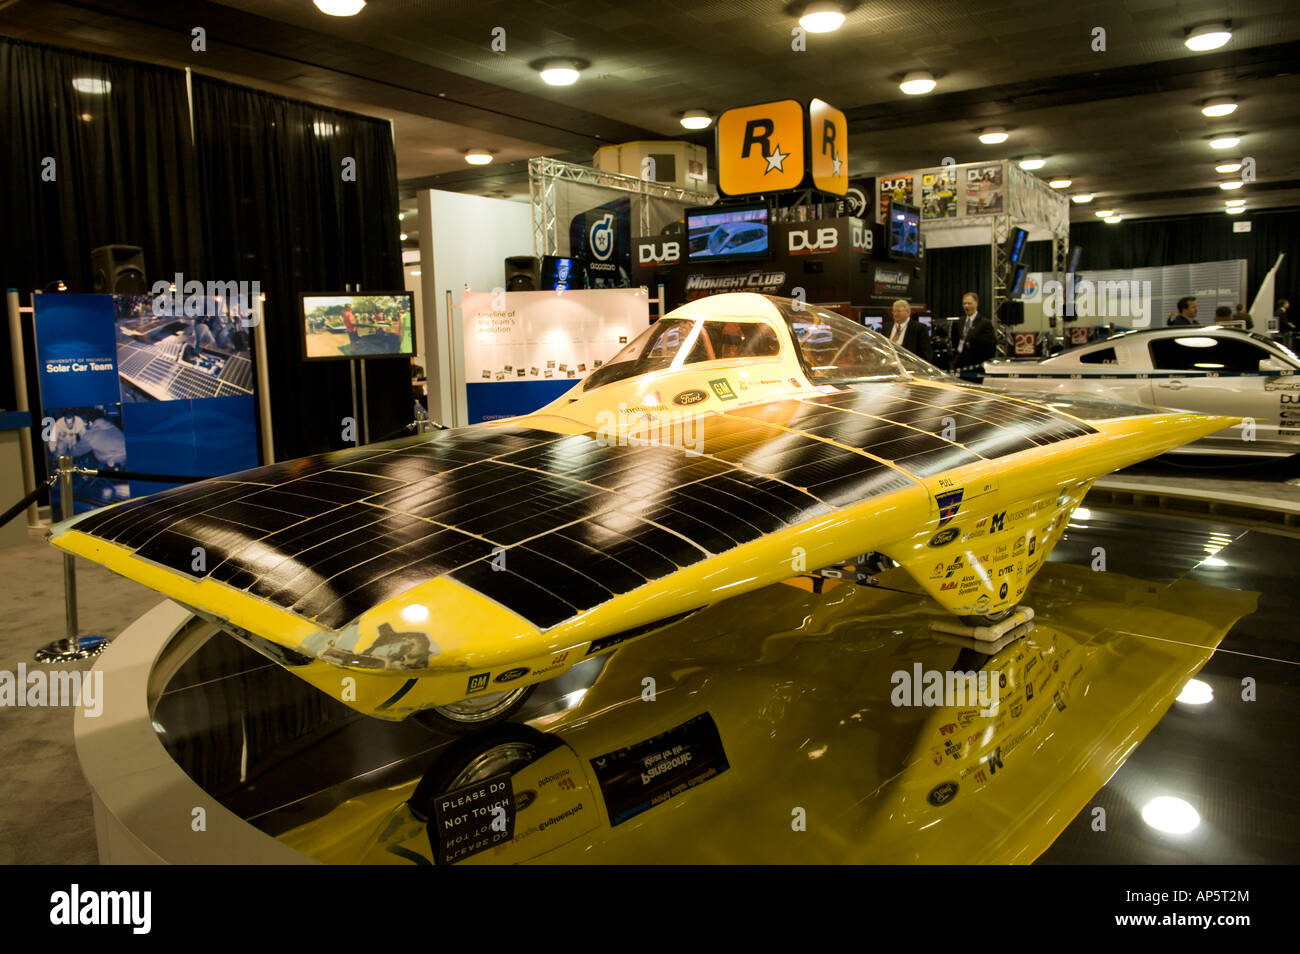 University of Michigan solar-powered racing car at the 2008 North American International Auto Show in Detroit Michigan USA Stock Photo